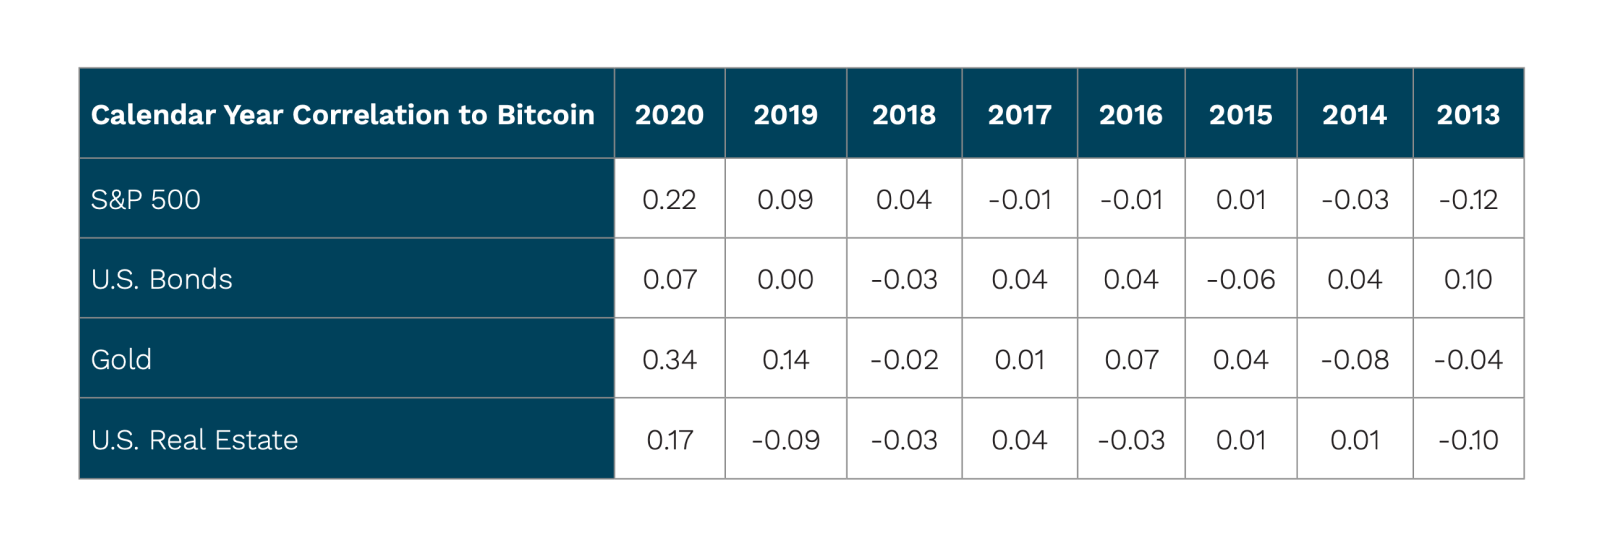 Volatility_of_Bitcoin-Calendar_Year_Correlation_to_Bitcoin.png